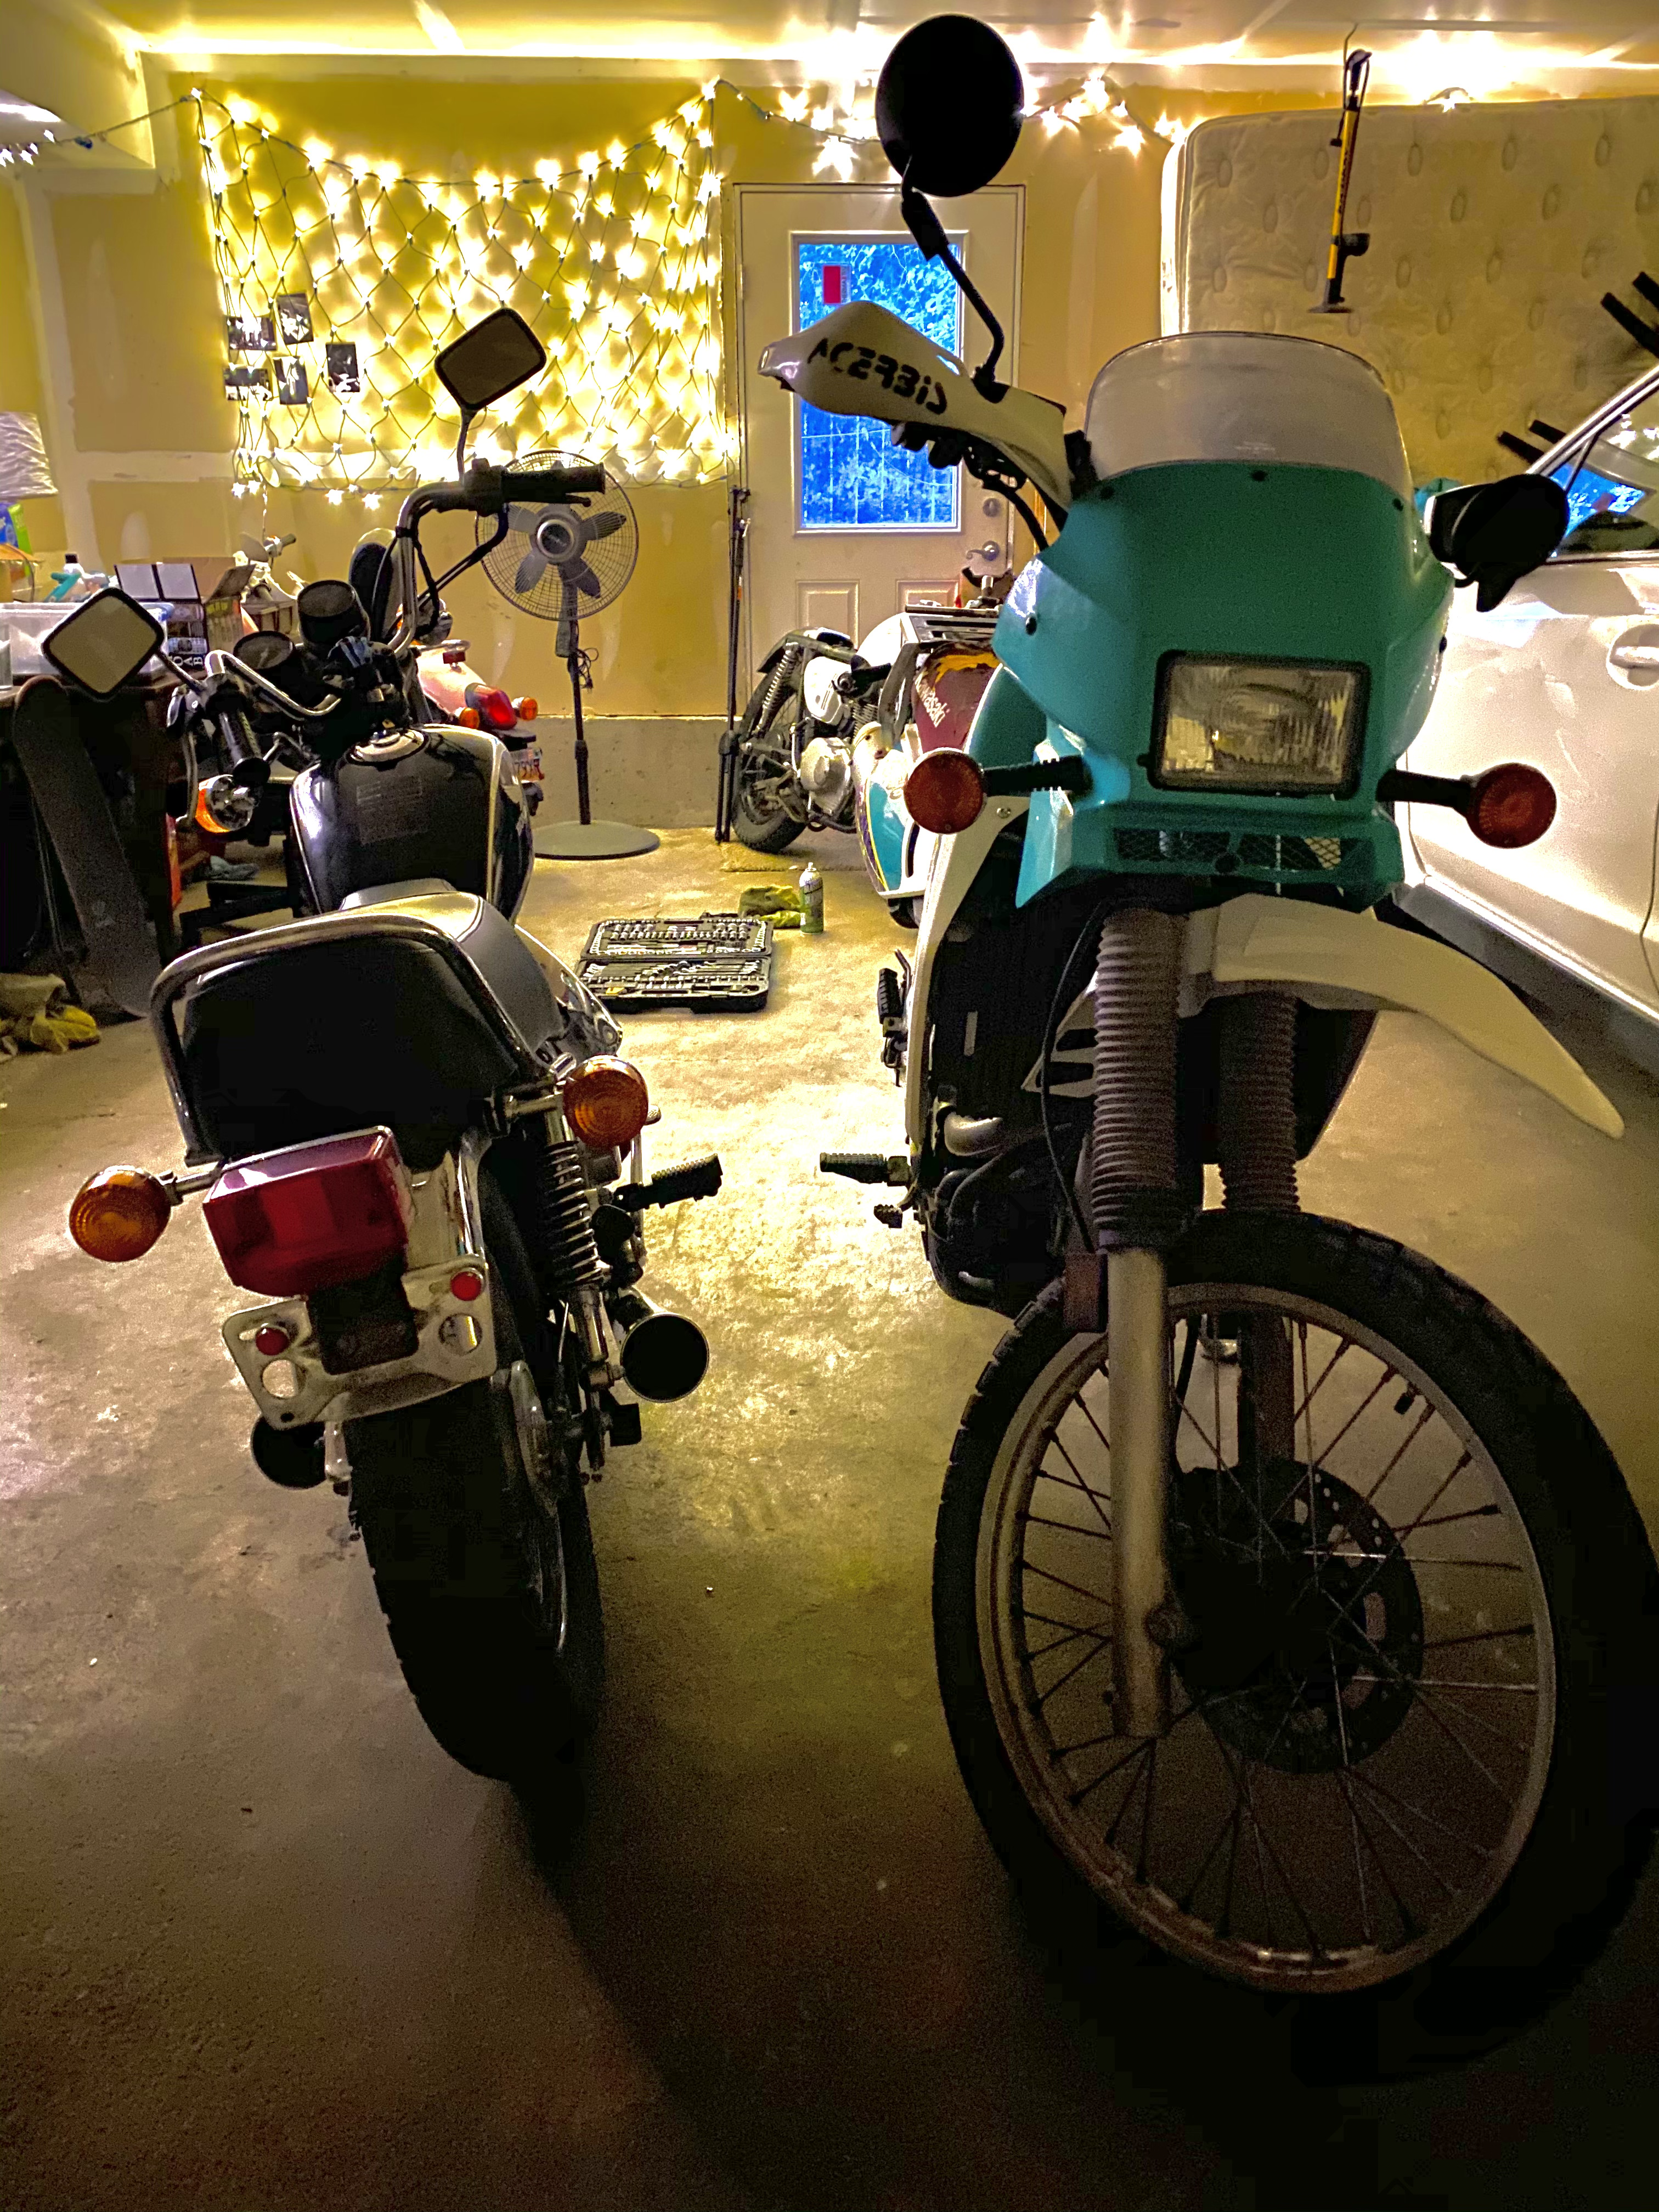 KLR and Honda in Garage